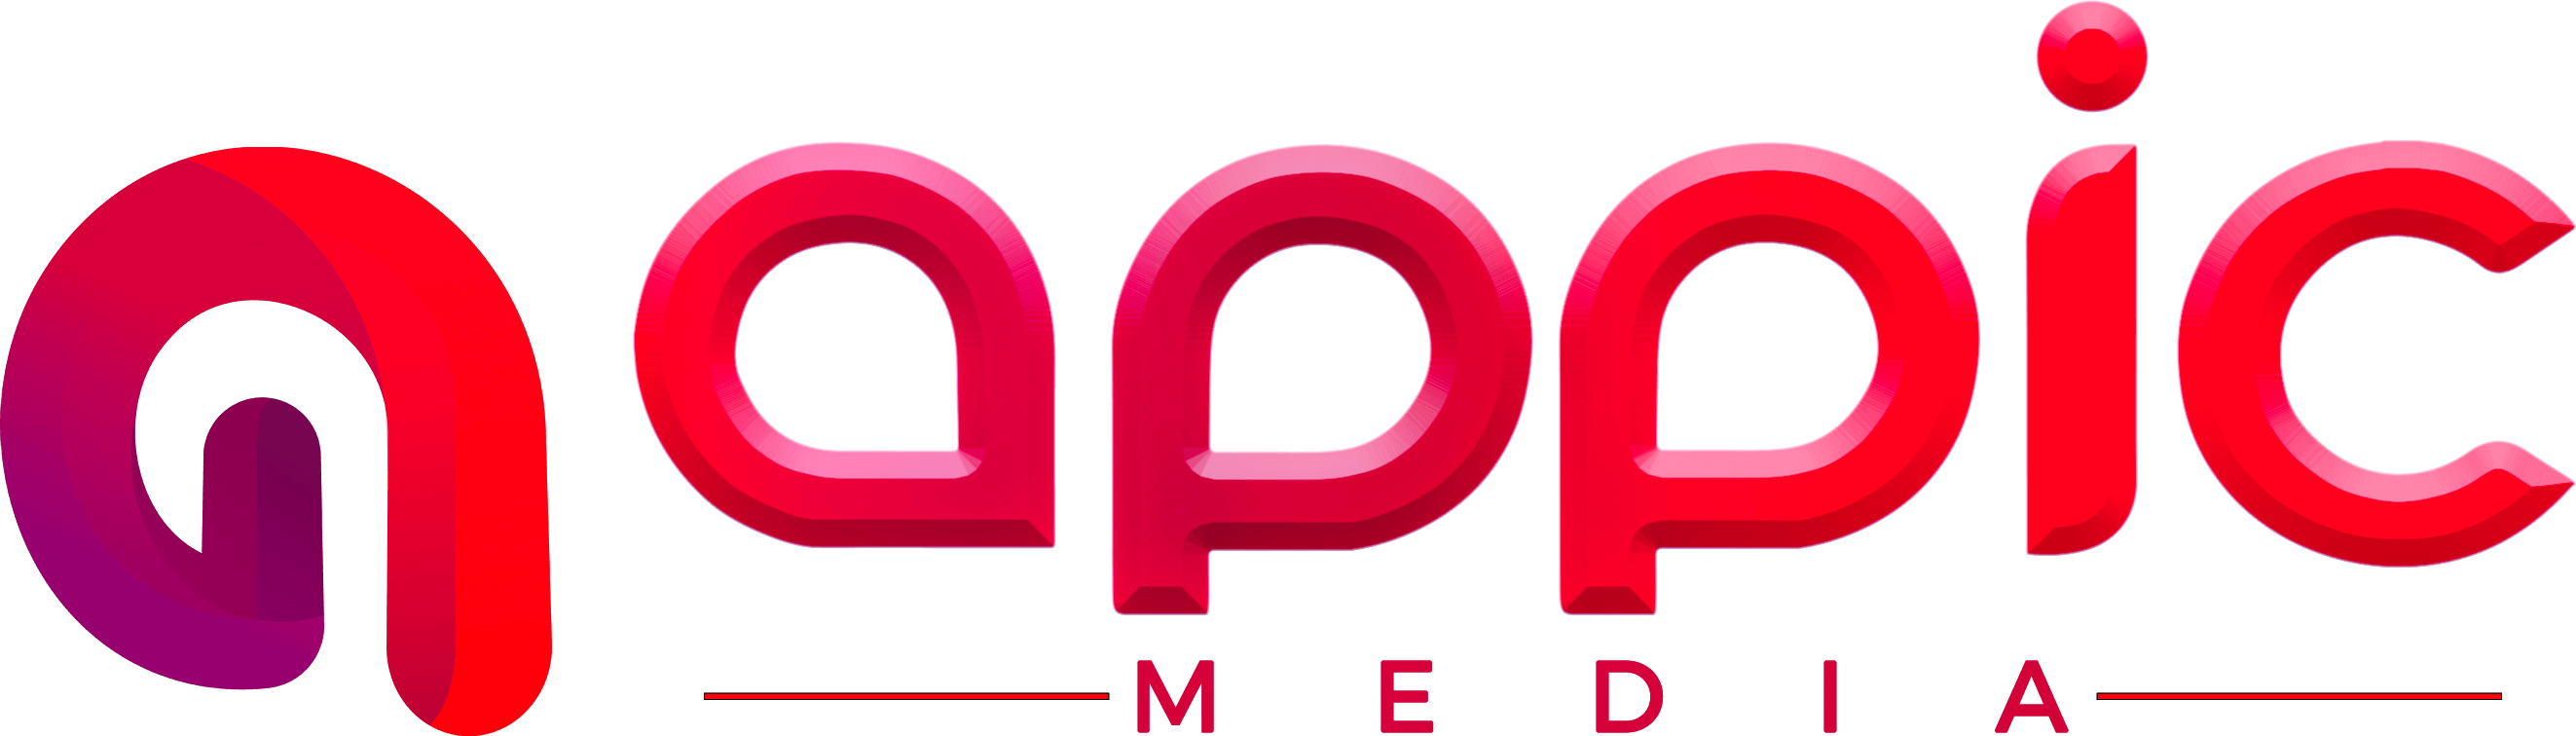 Appic Media | Best Digital Marketing Agency